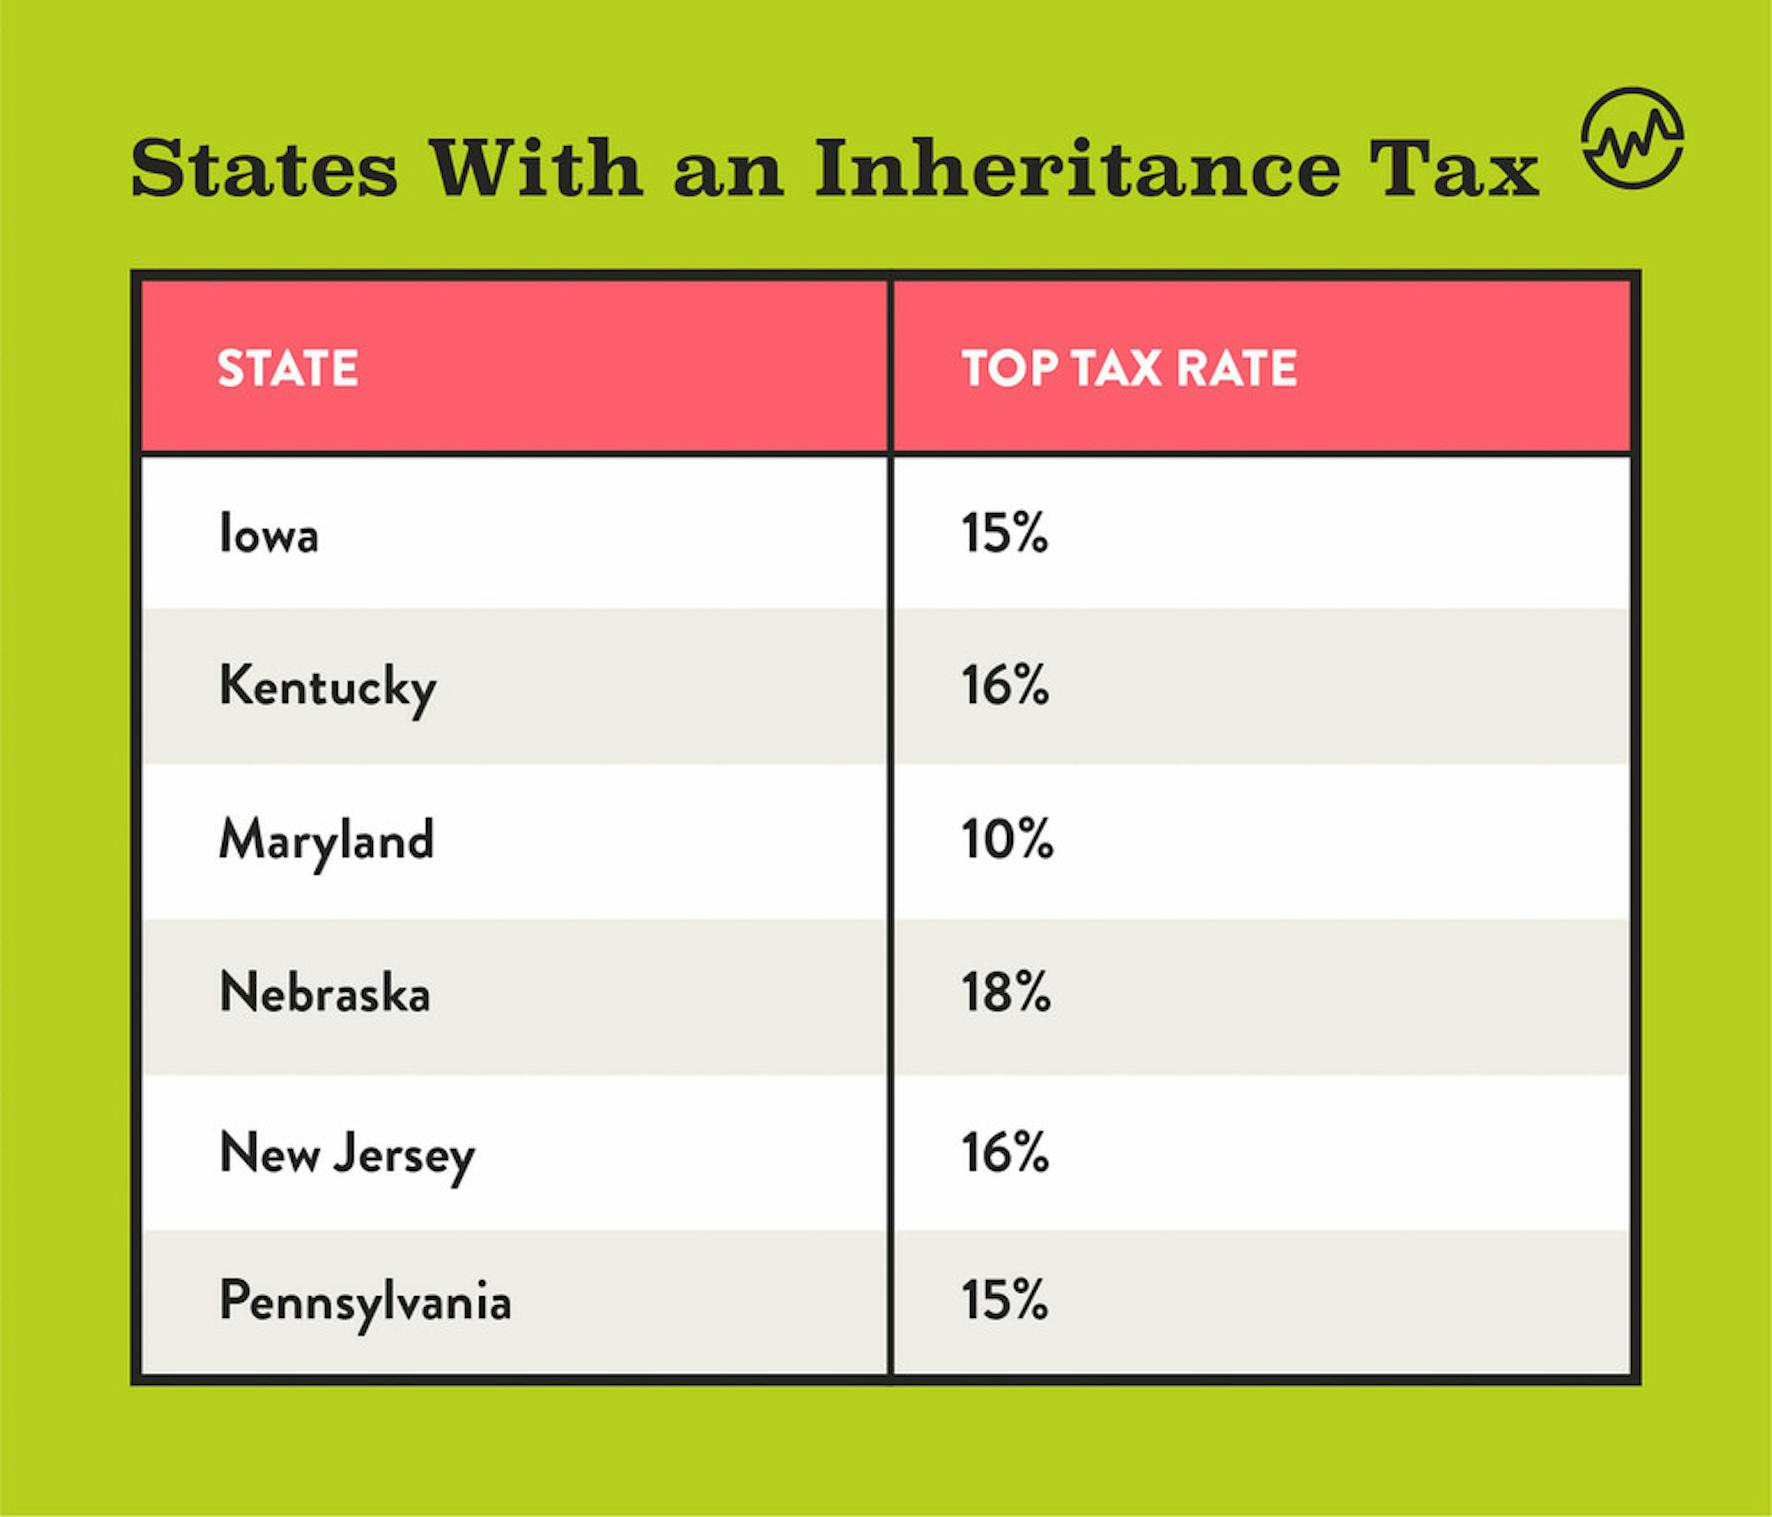 Inheritance Tax How Much Will Your Children Get? Your Estate Tax